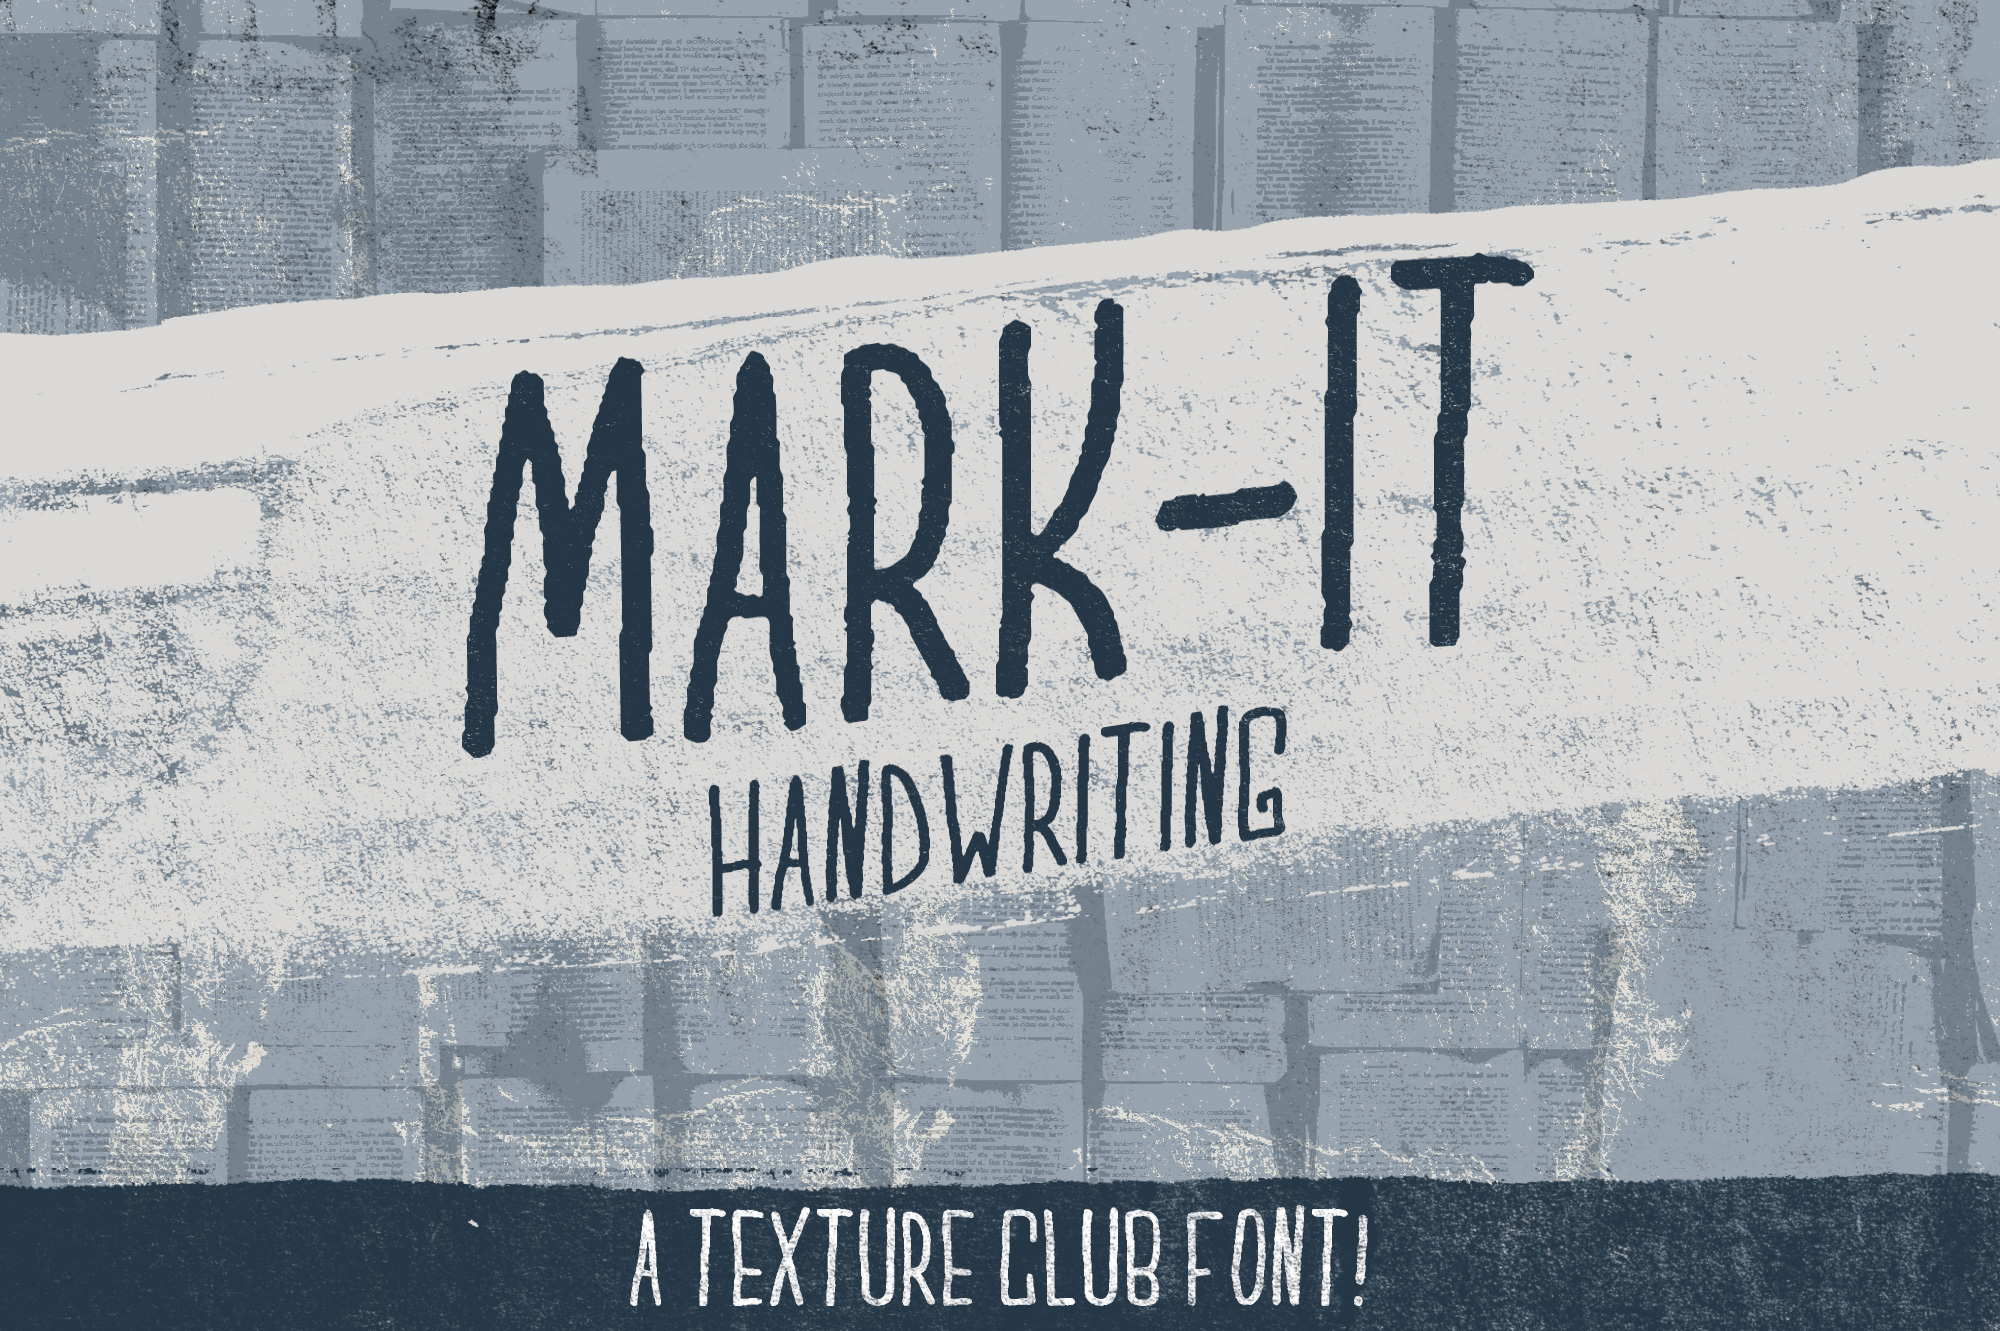 Mark-It Font Poster 1